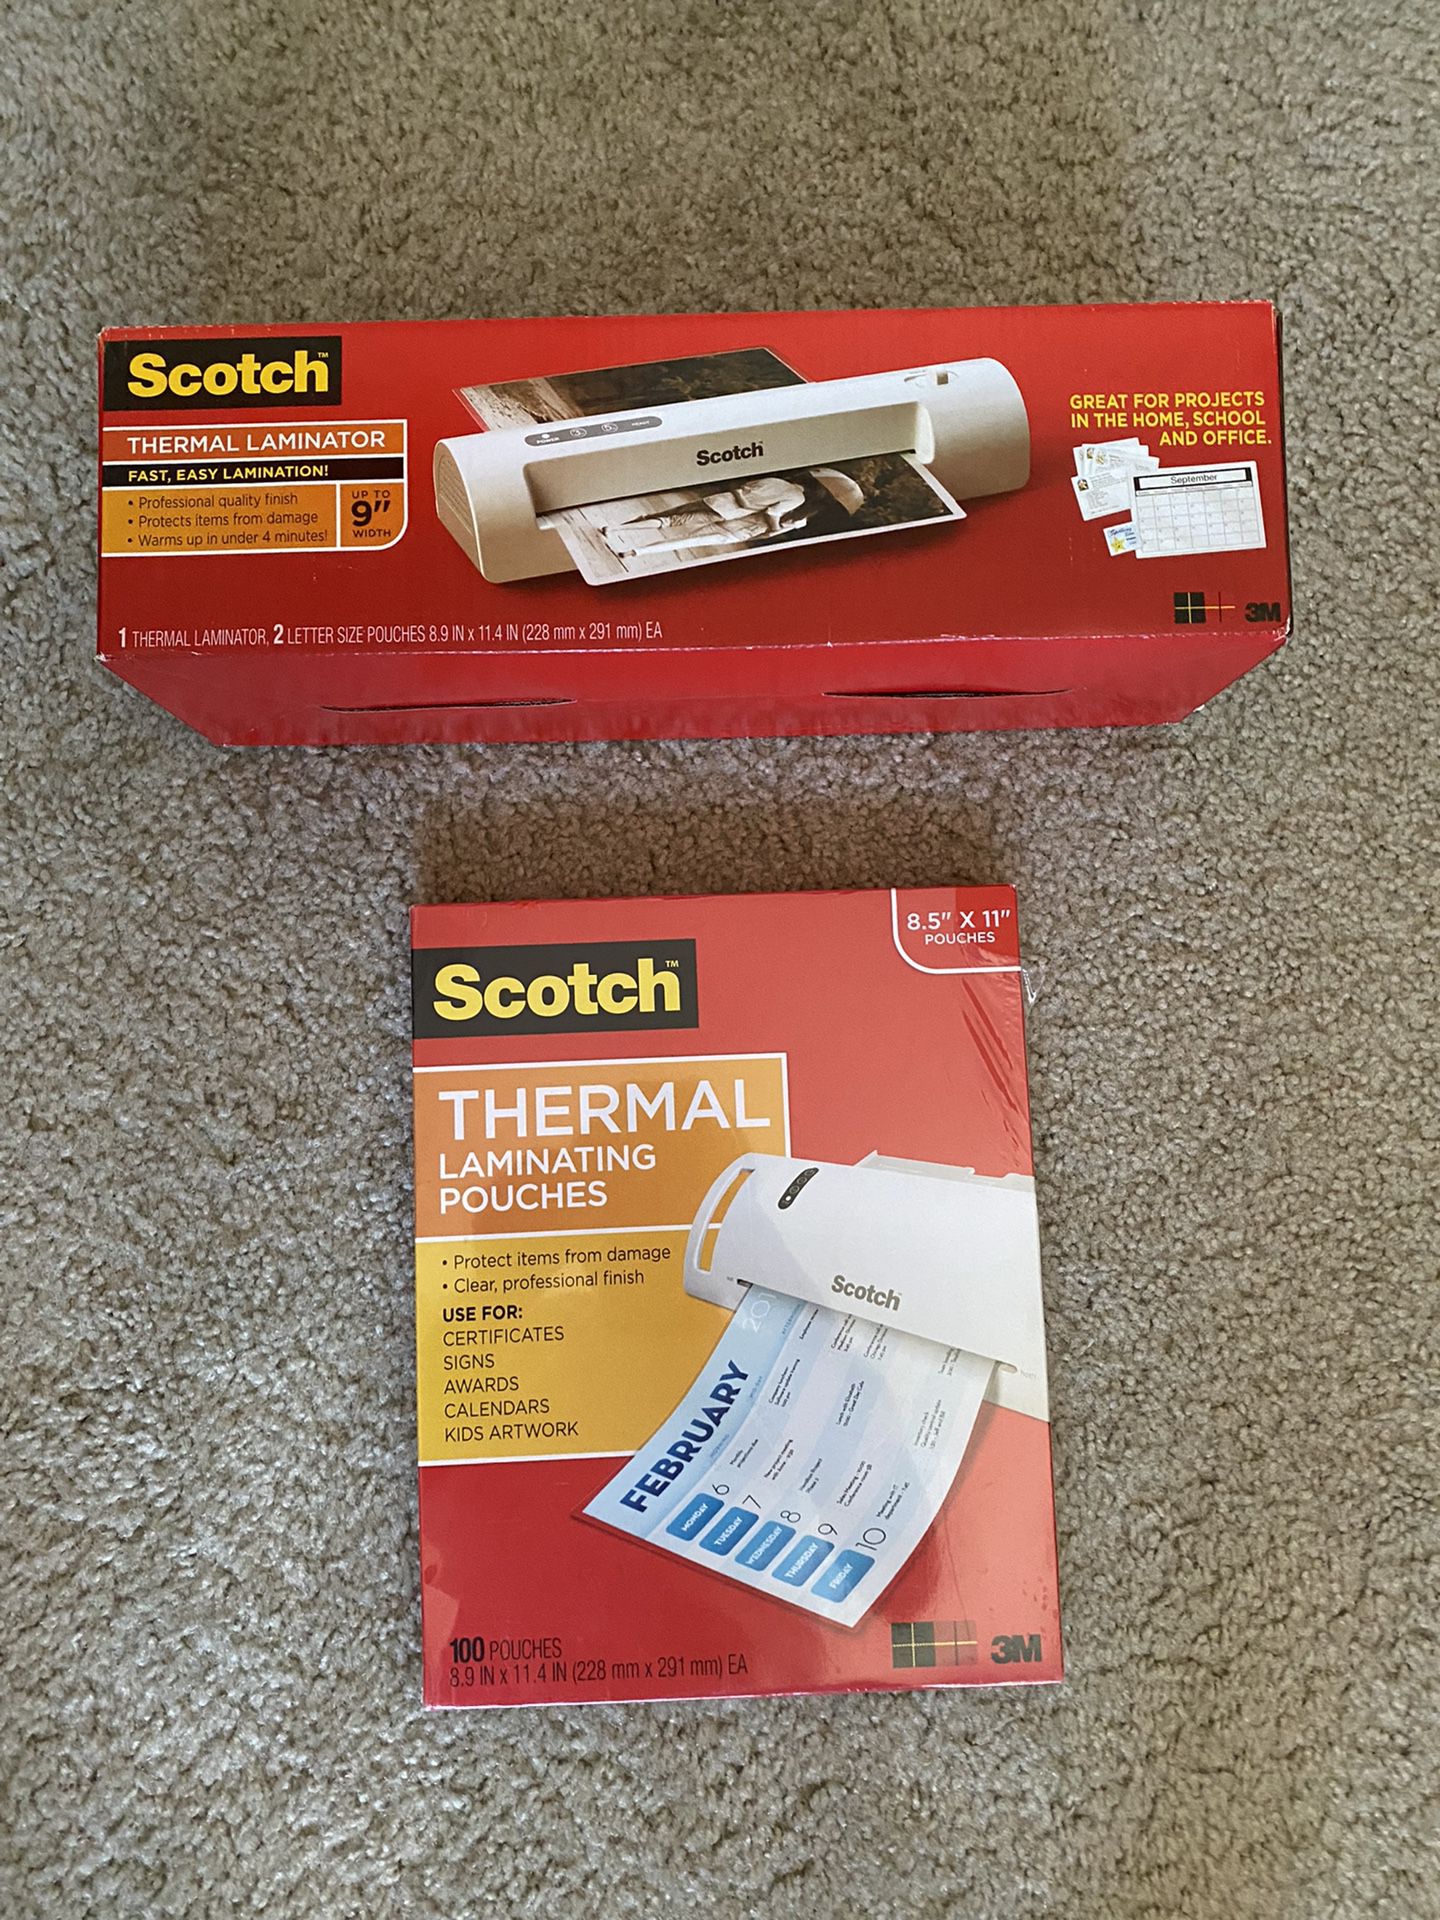 Scotch new laminator pouch set Photo Office Document